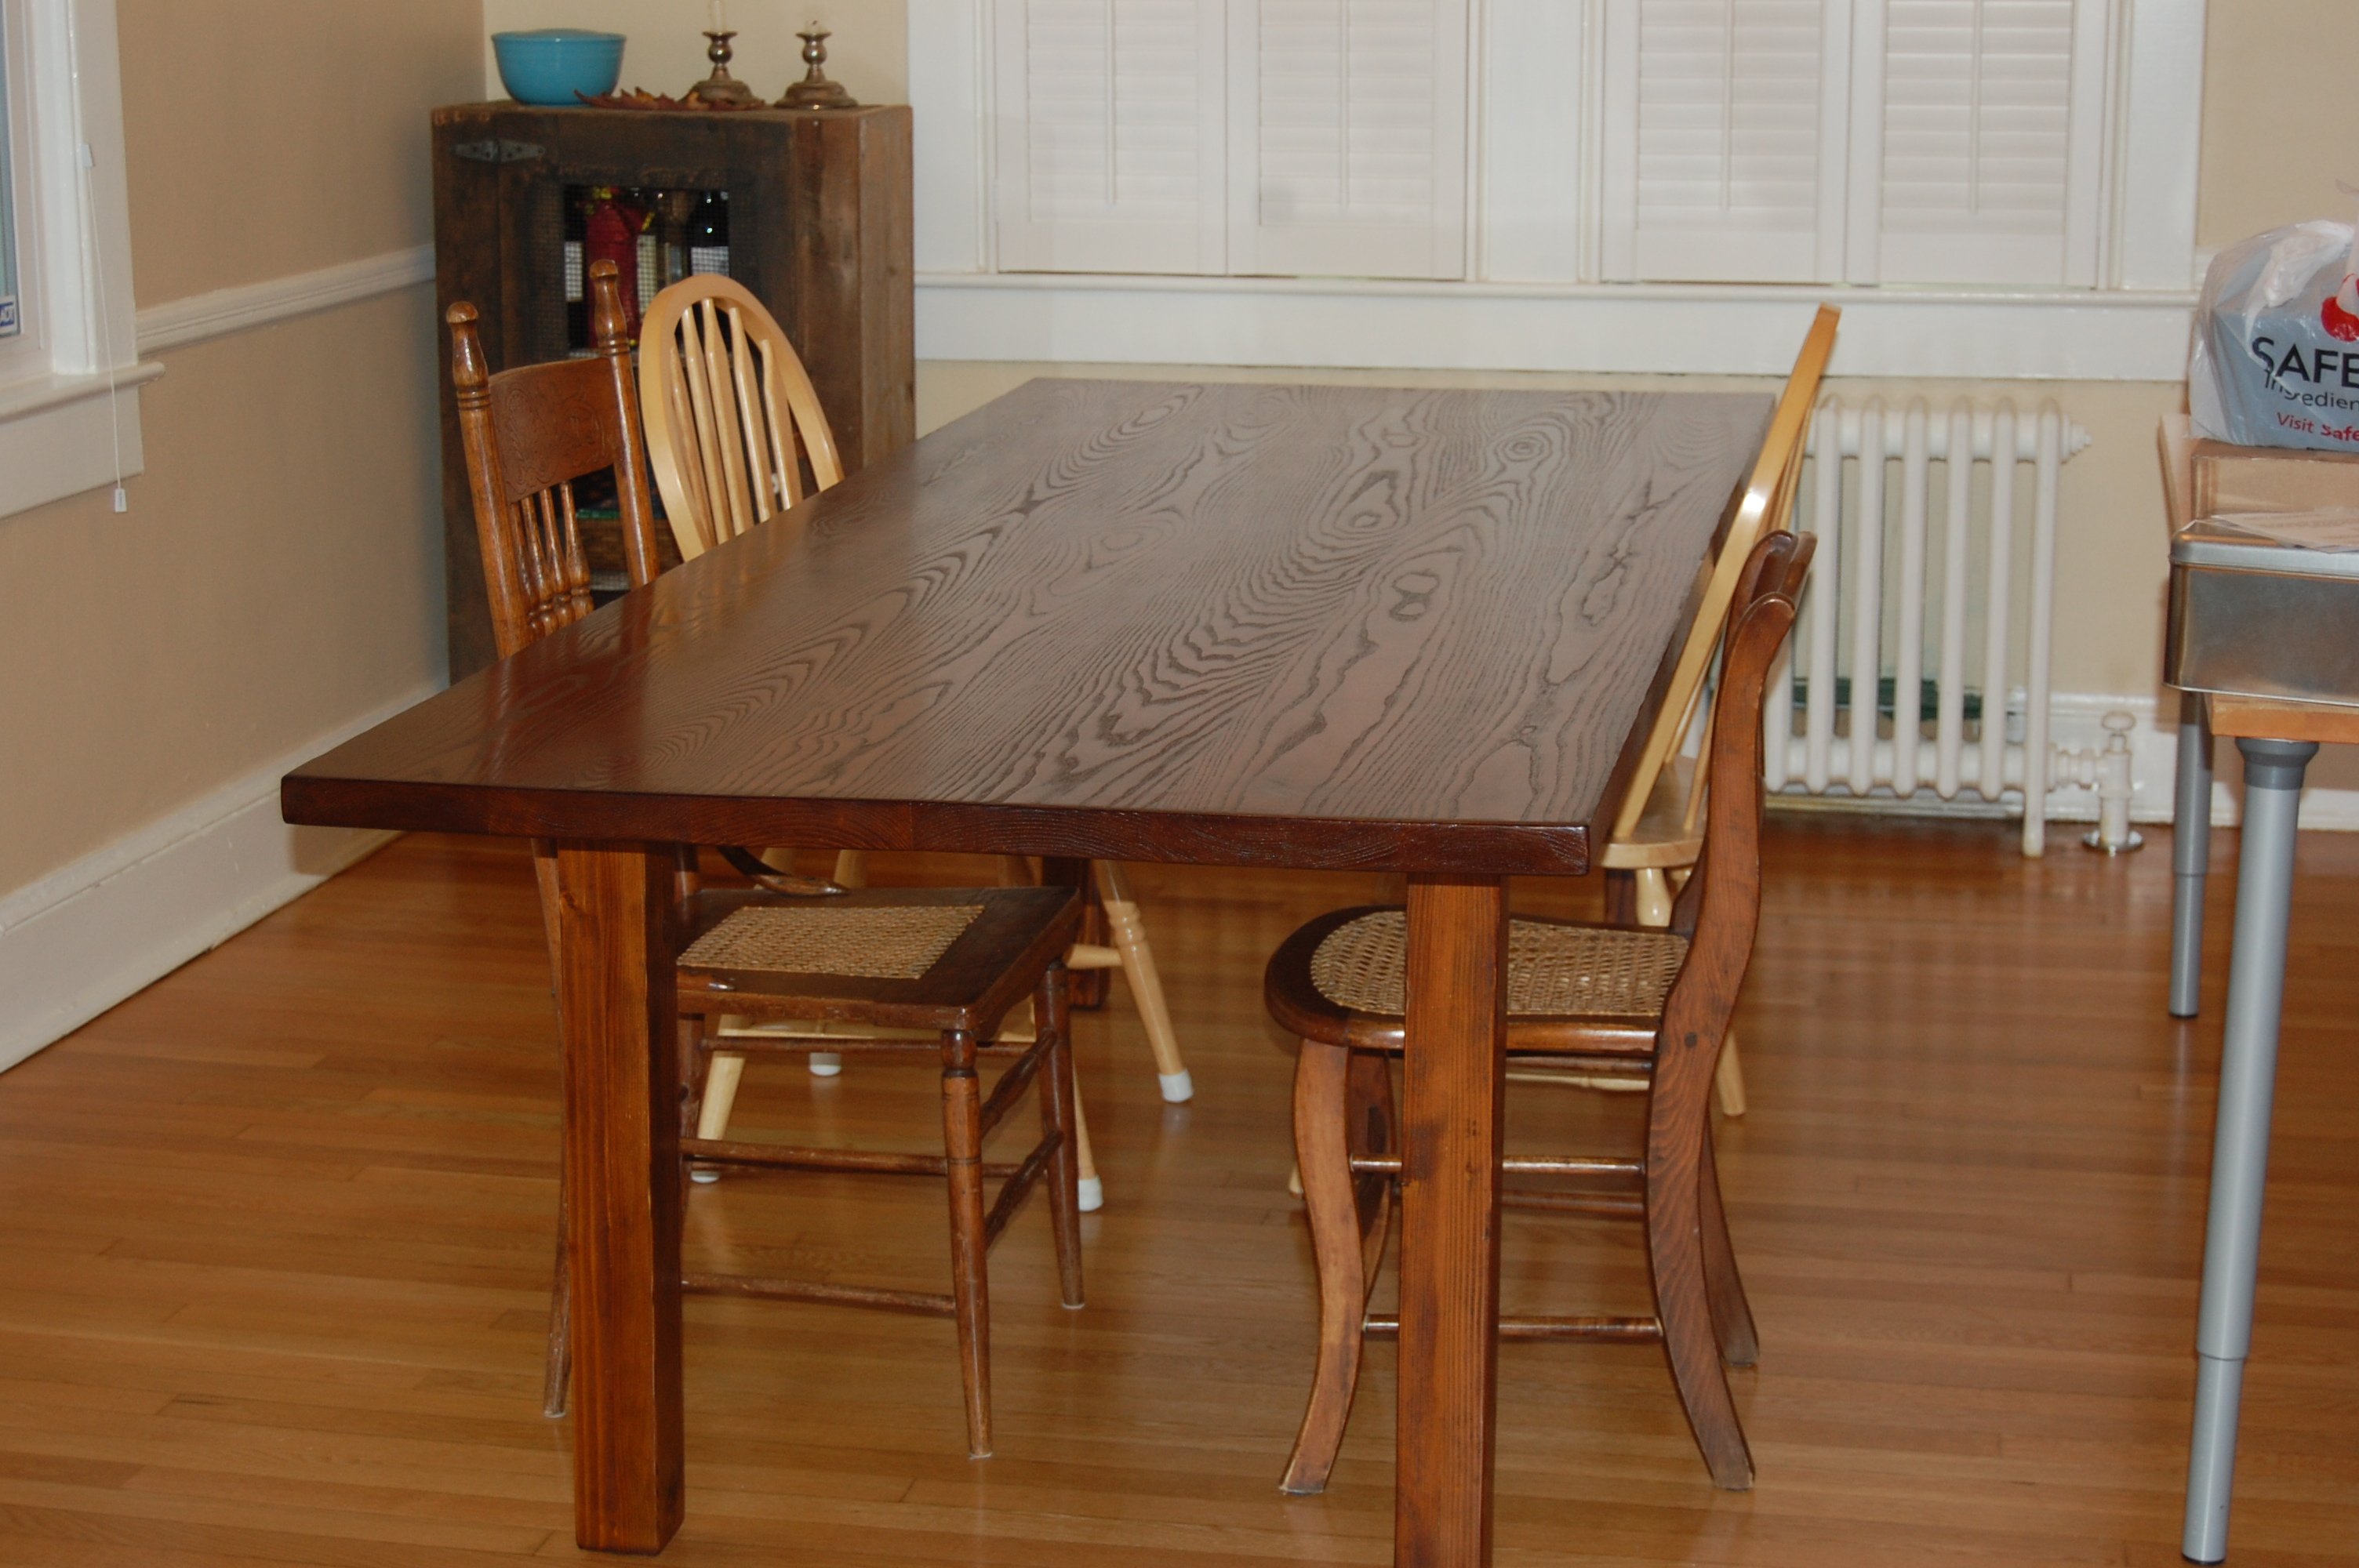 Farmhouse Inspired Table Ana White, Craigslist Dining Room Table